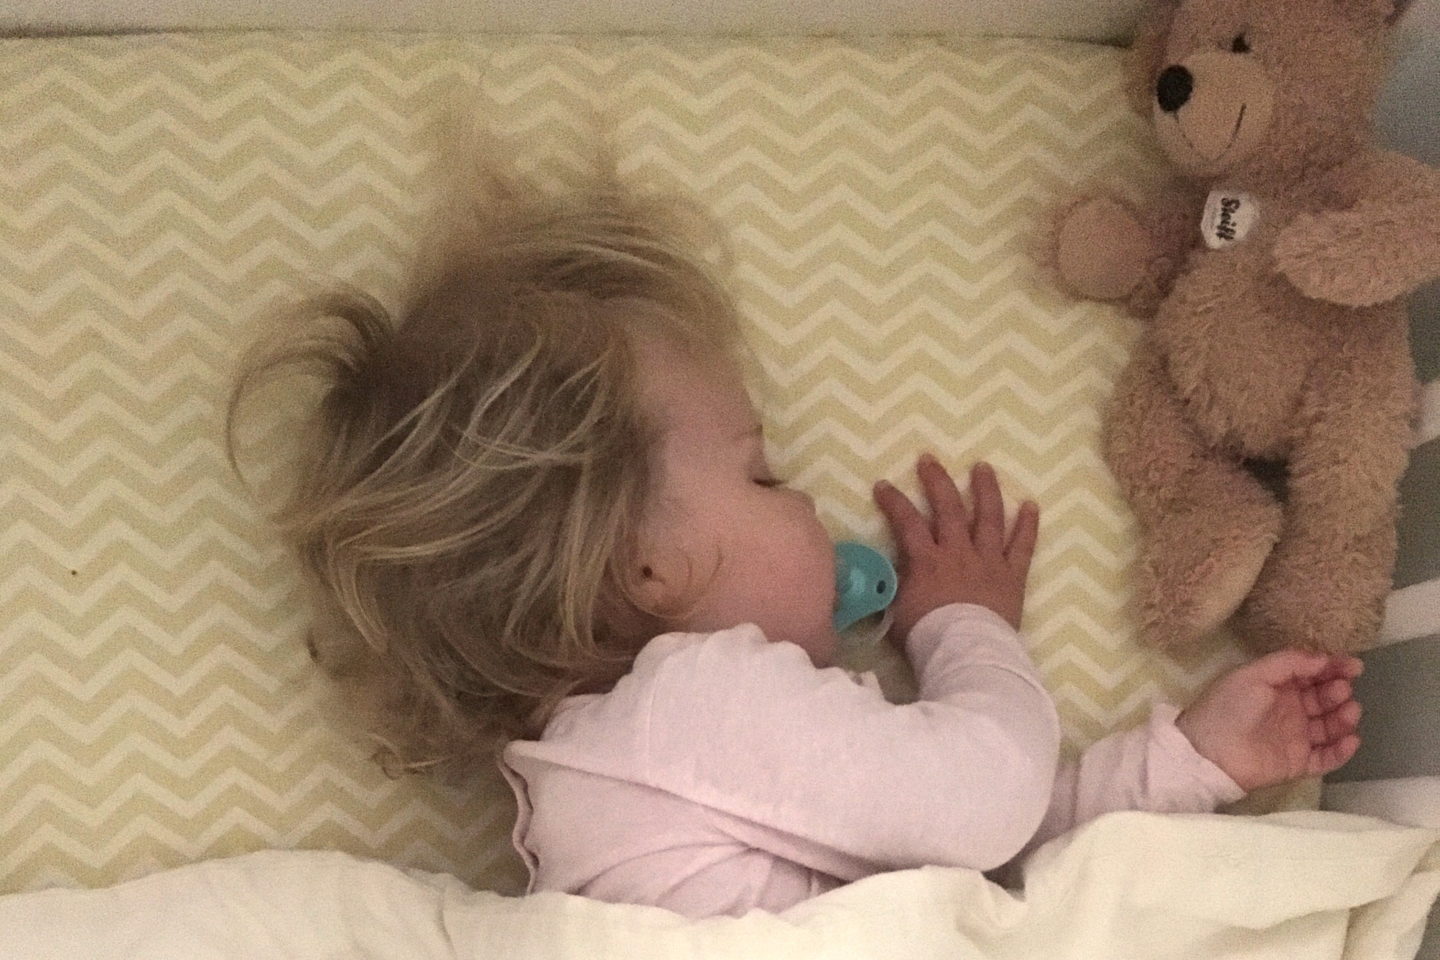 18 month old girl sleeping in cot under duvet